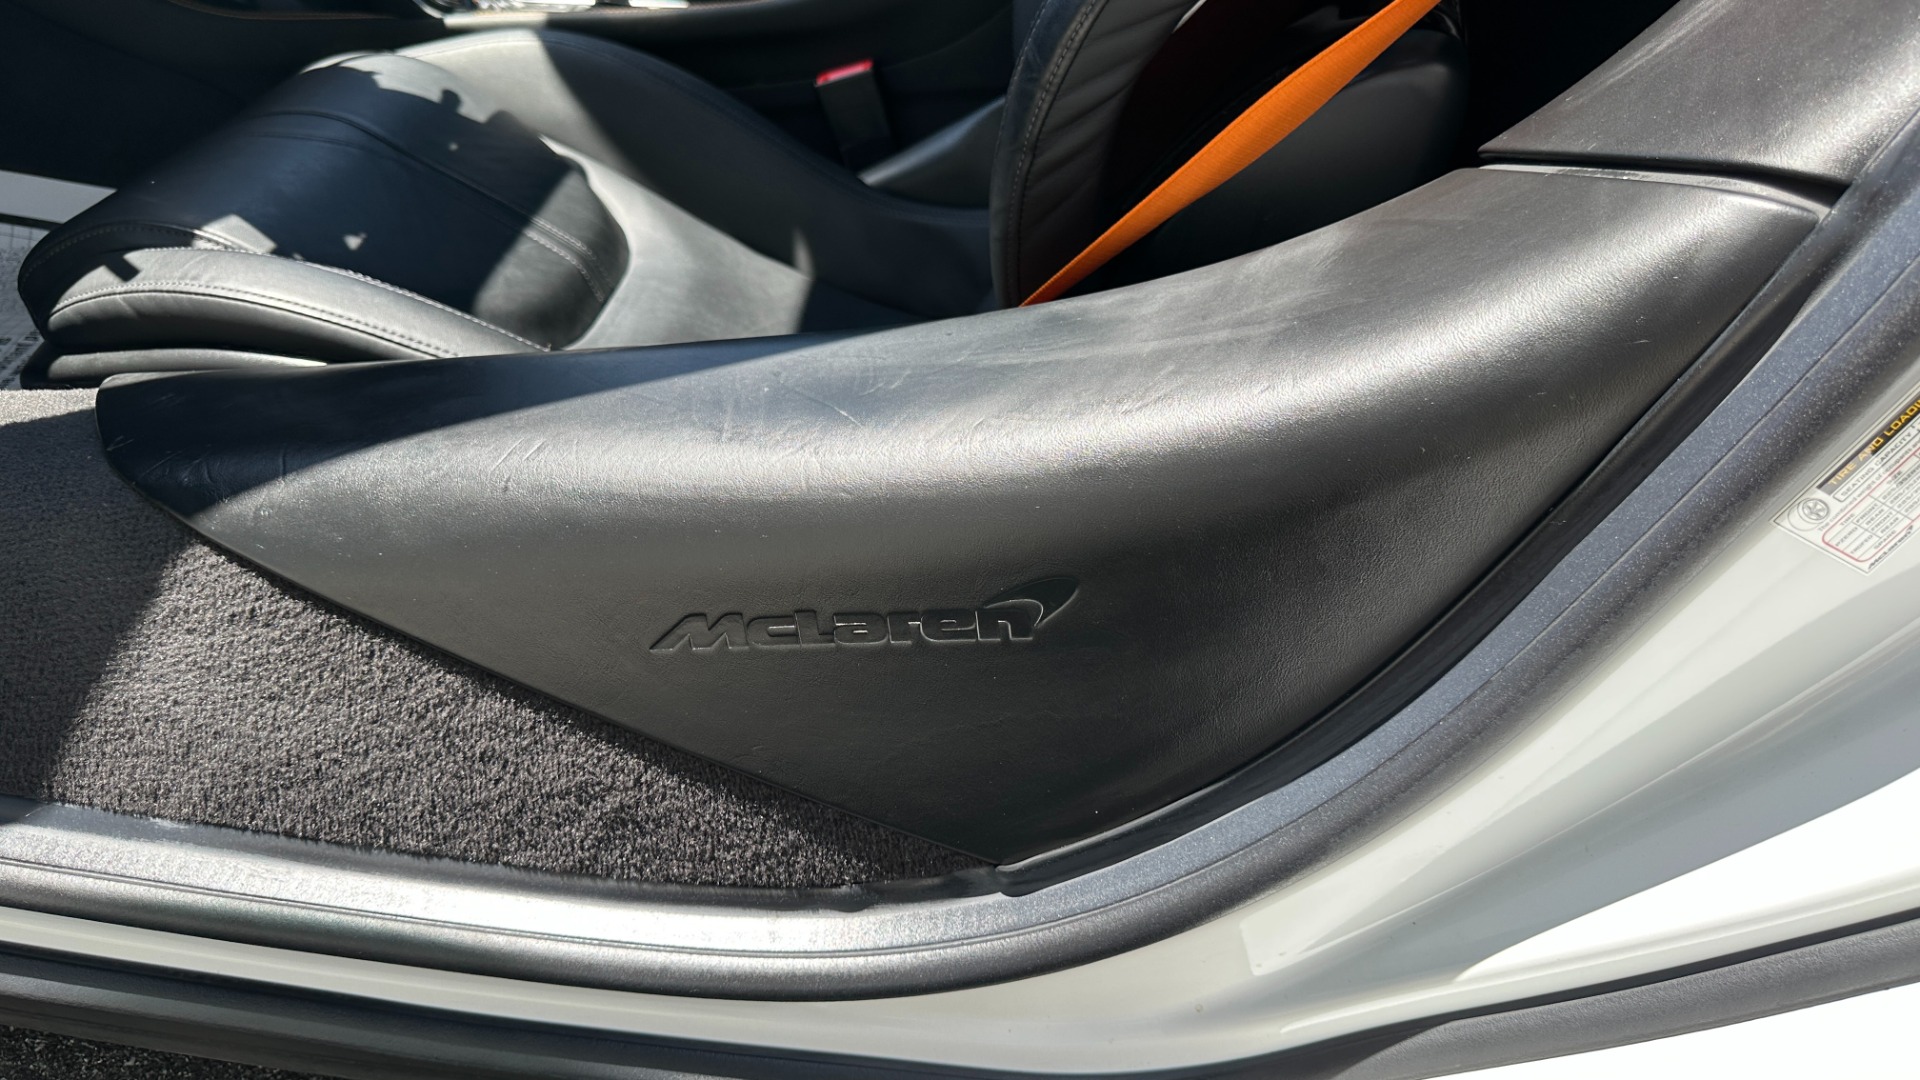 Used 2020 McLaren 600LT SPIDER / FRONT PPF / LEATHER INT / MSO BELTS / CARBON FIBER INT for sale $295,000 at Formula Imports in Charlotte NC 28227 26